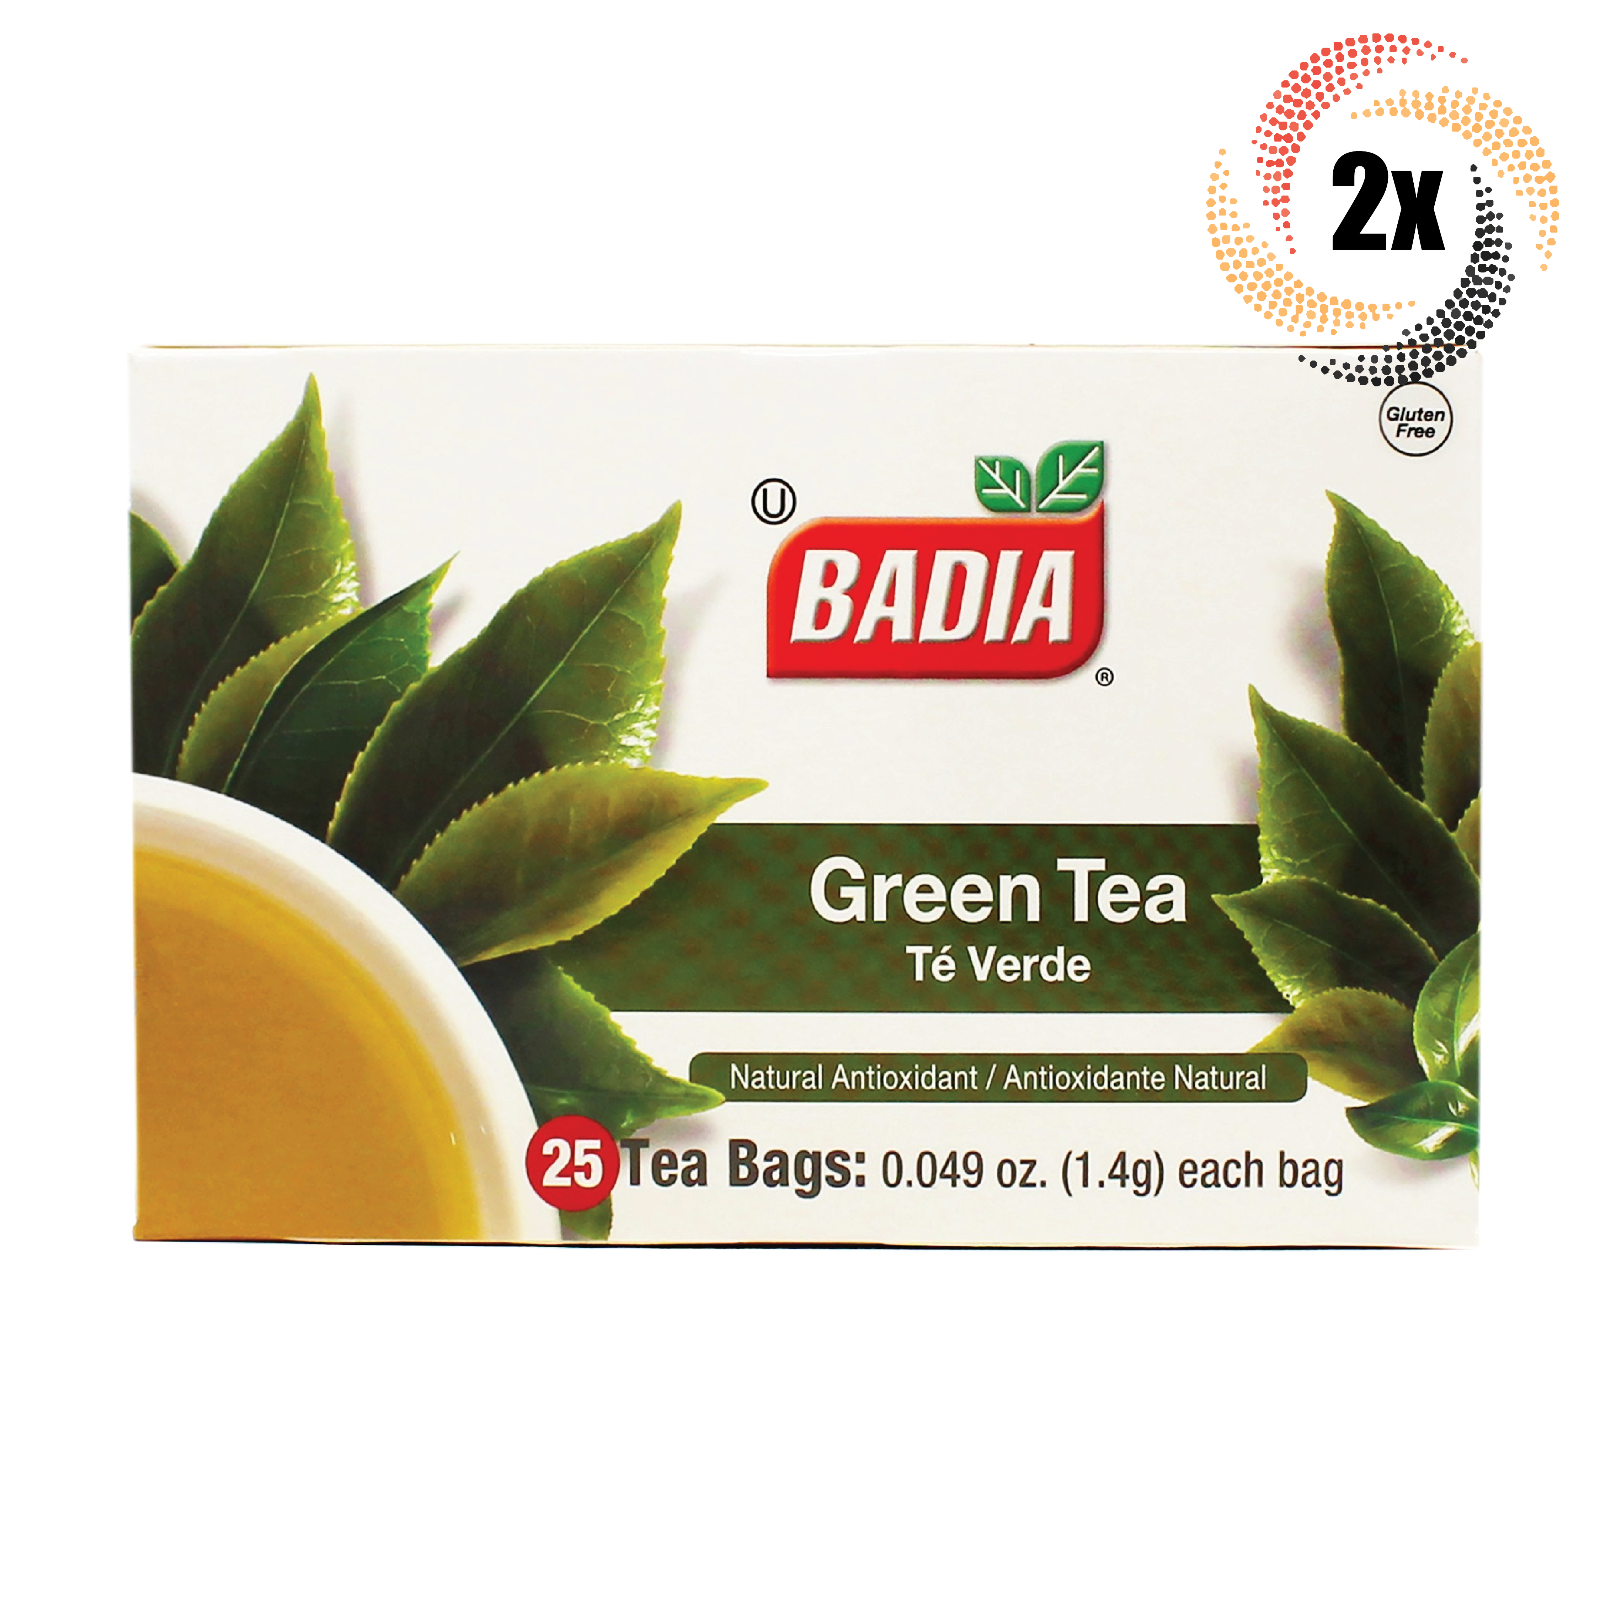 Primary image for 2x Boxes Badia Green Tea Natural Antioxidant | 25 Bags Per Box | Té Verde